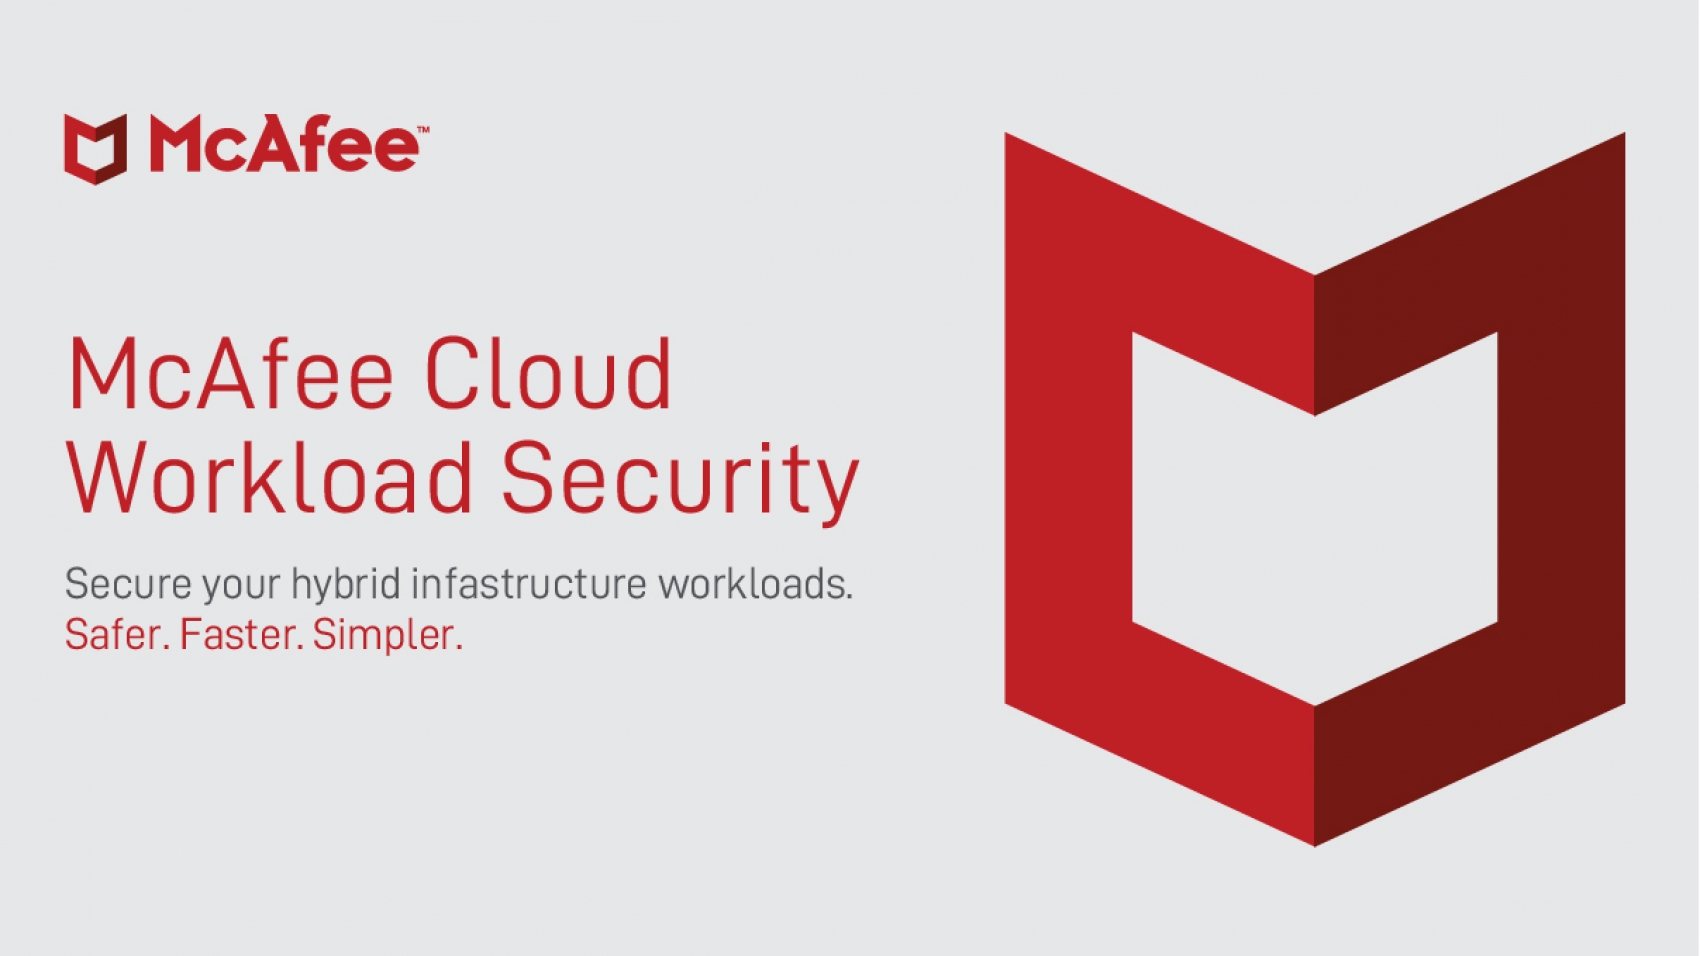 mcafee cloud workload security